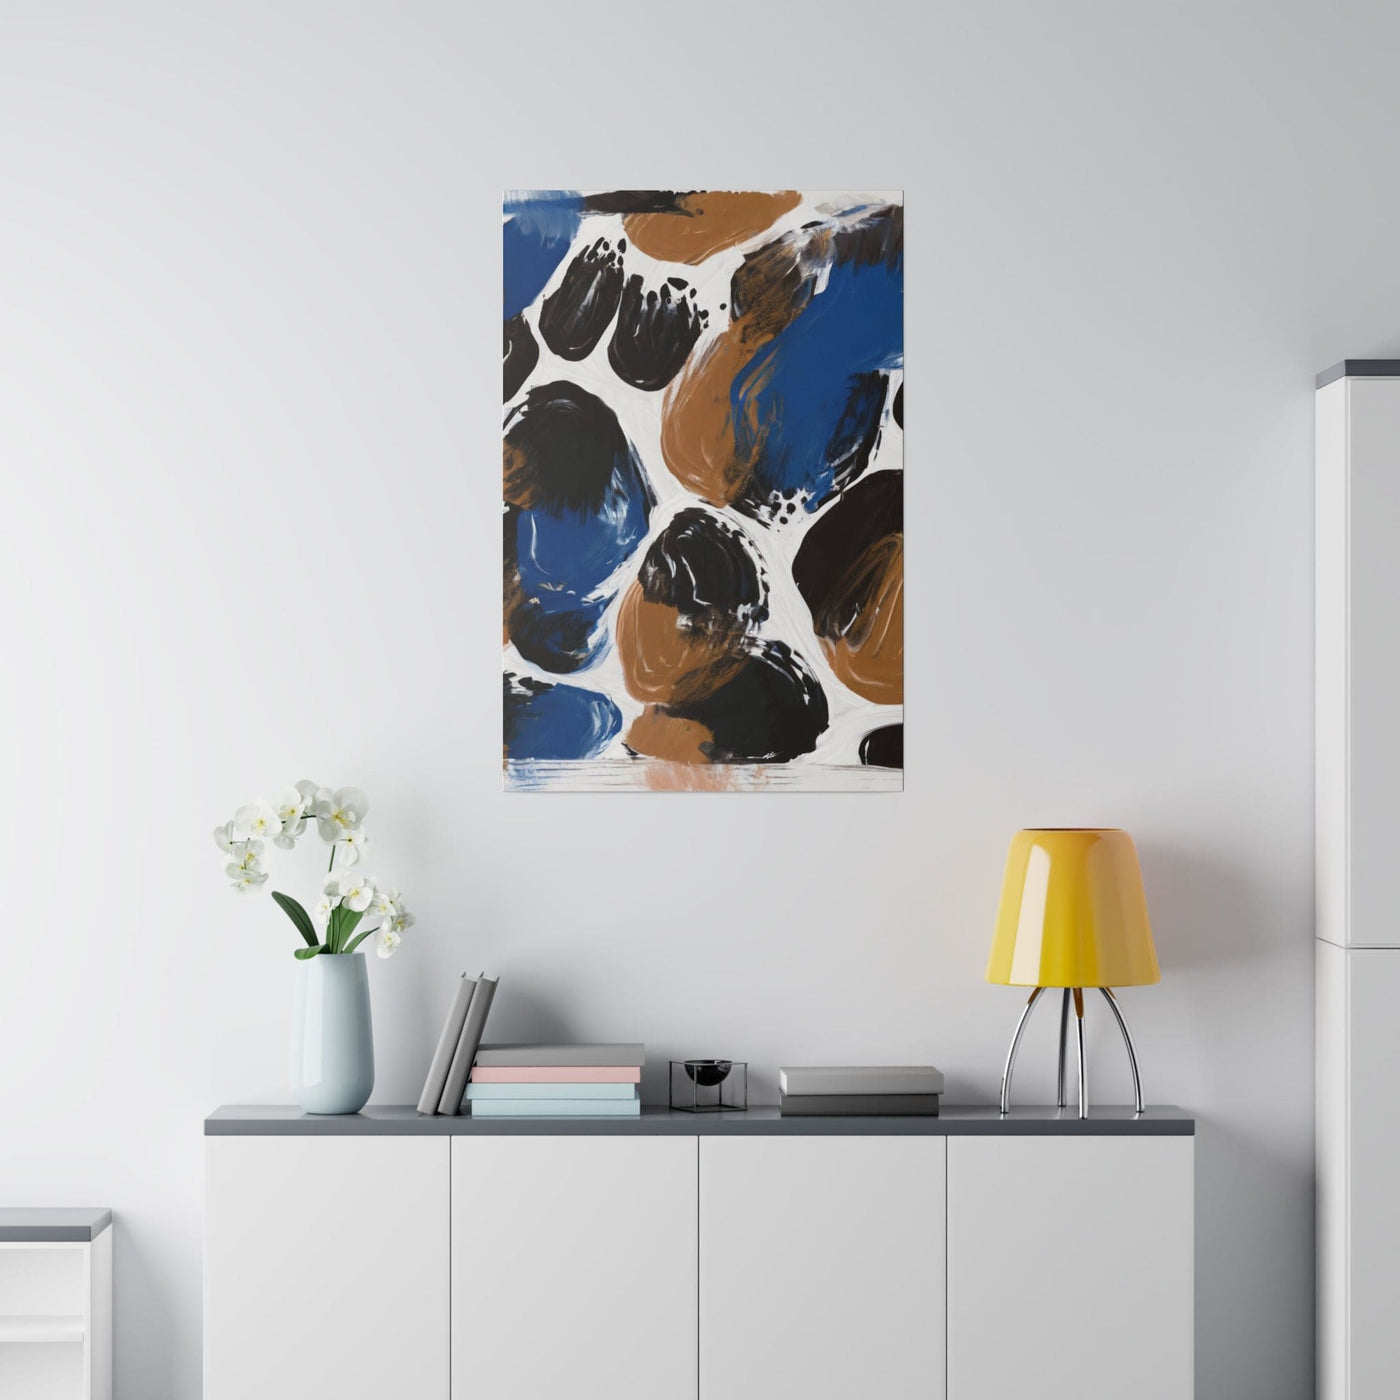 Wall Art Poster Print for Living Room Office Decor Bedroom Artwork Dark Blue